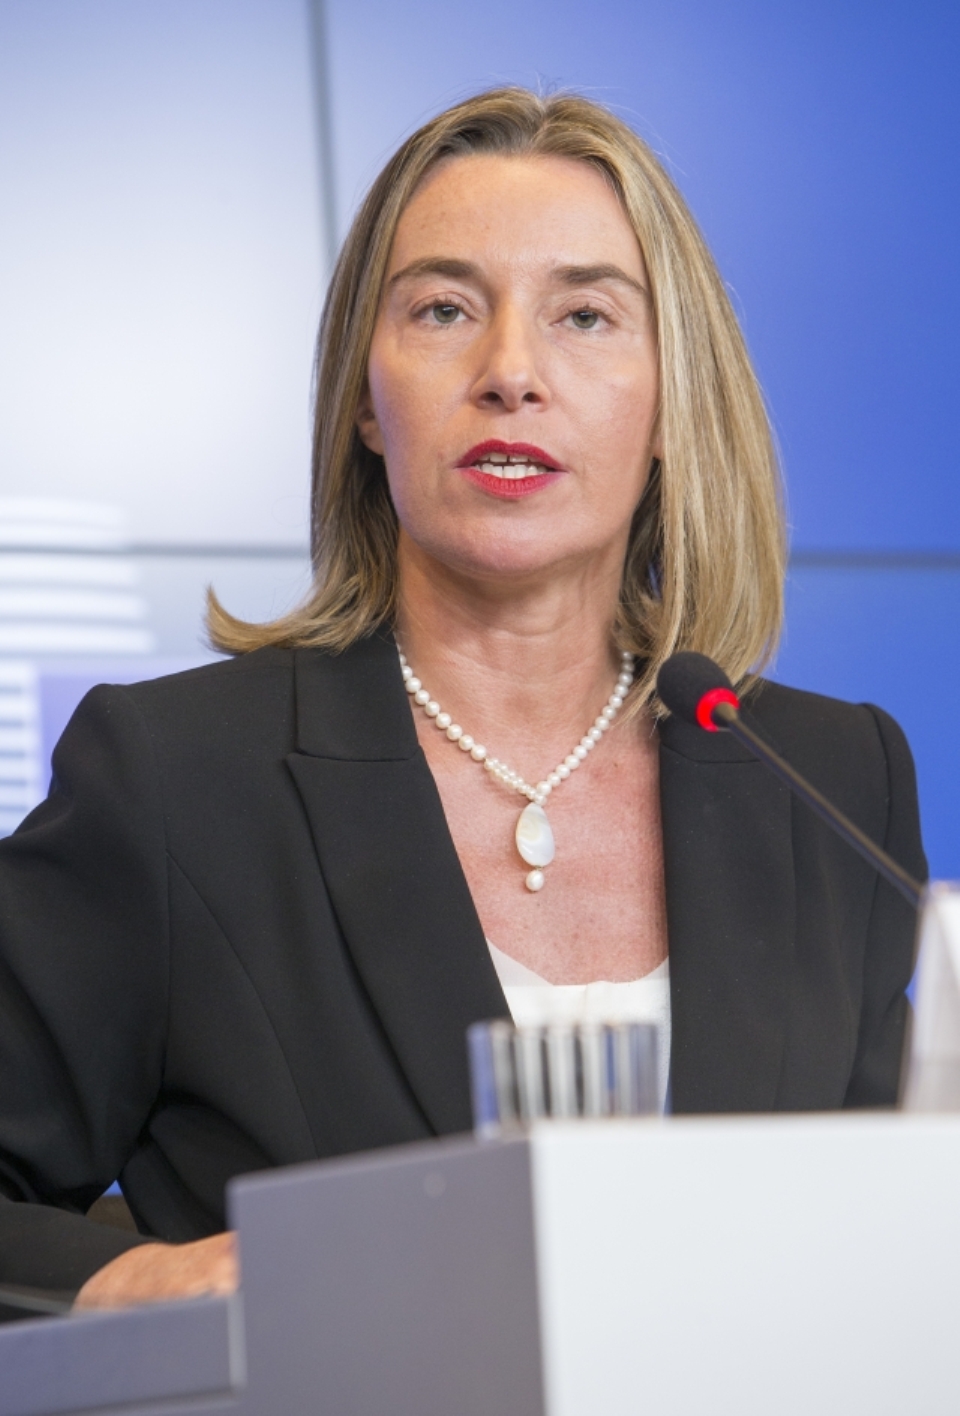 EU High Representative Federica Mogherini